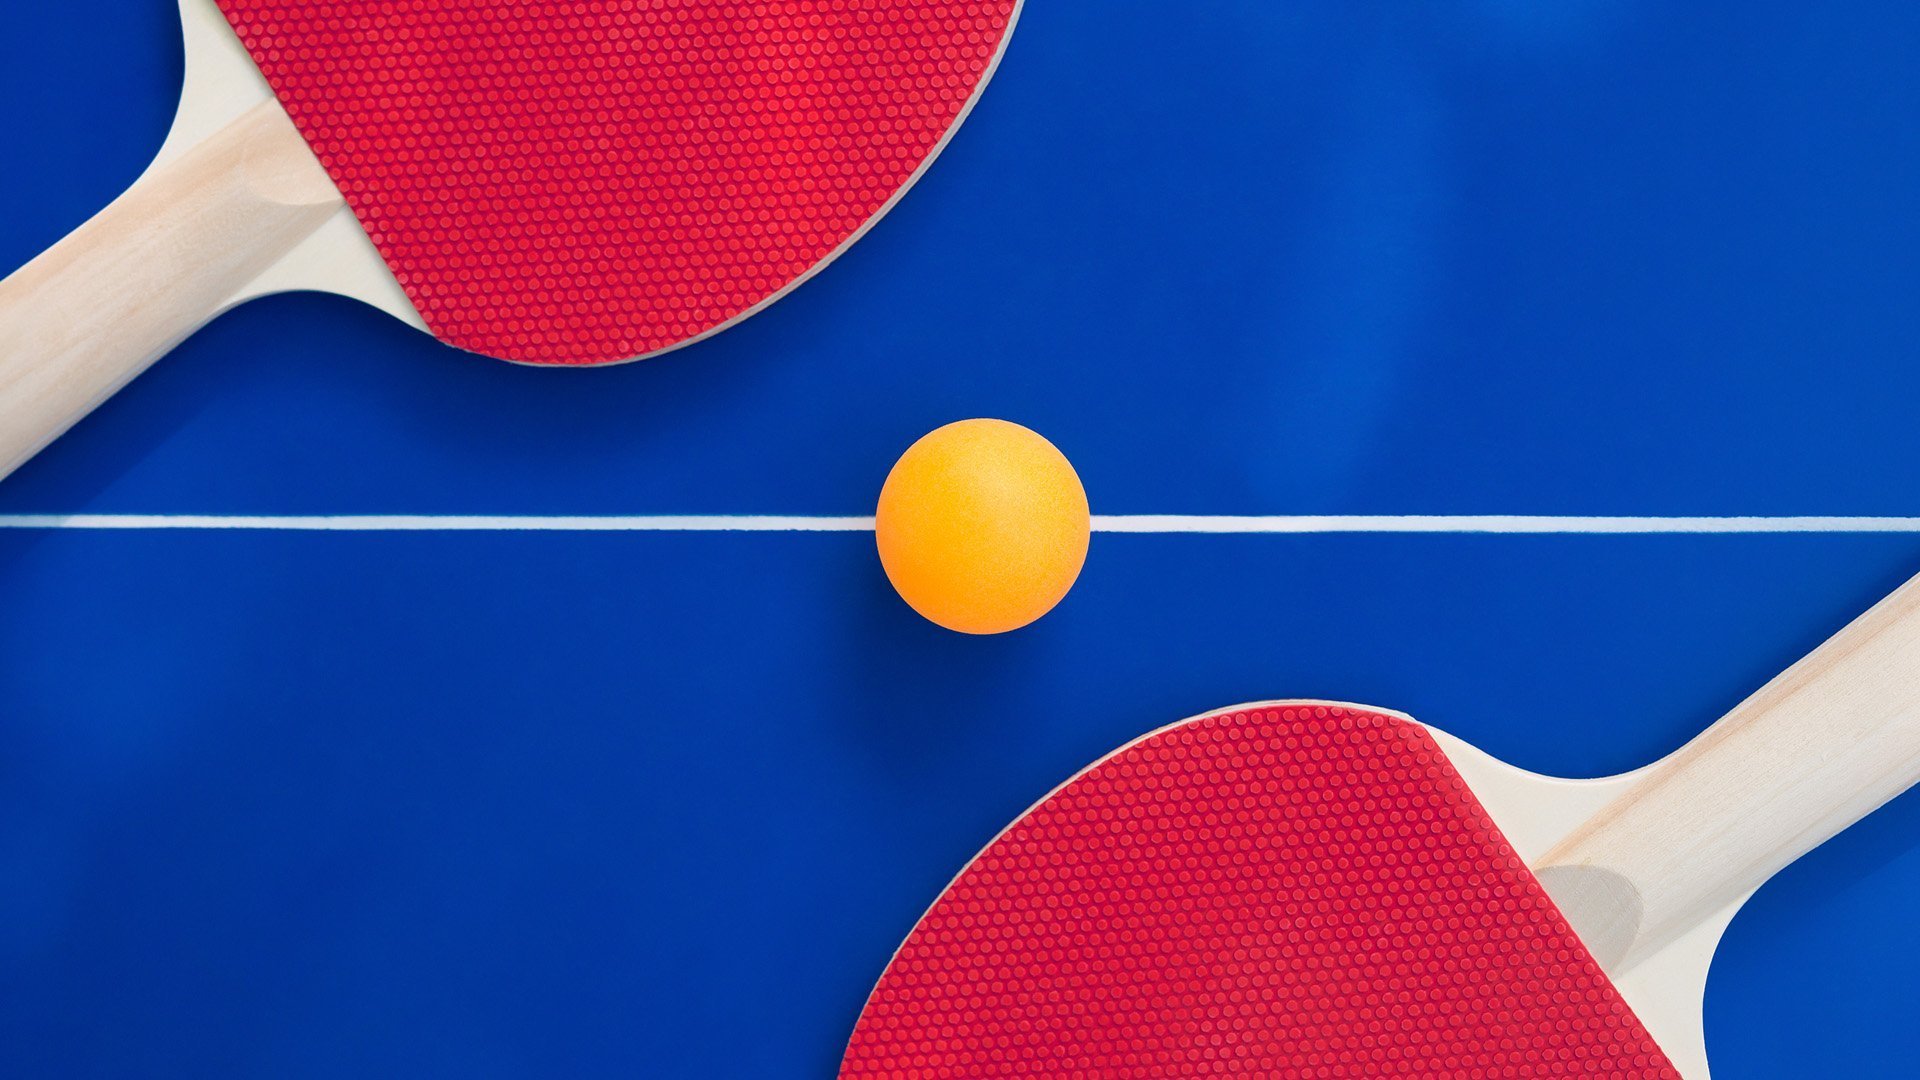 Asian ping pong